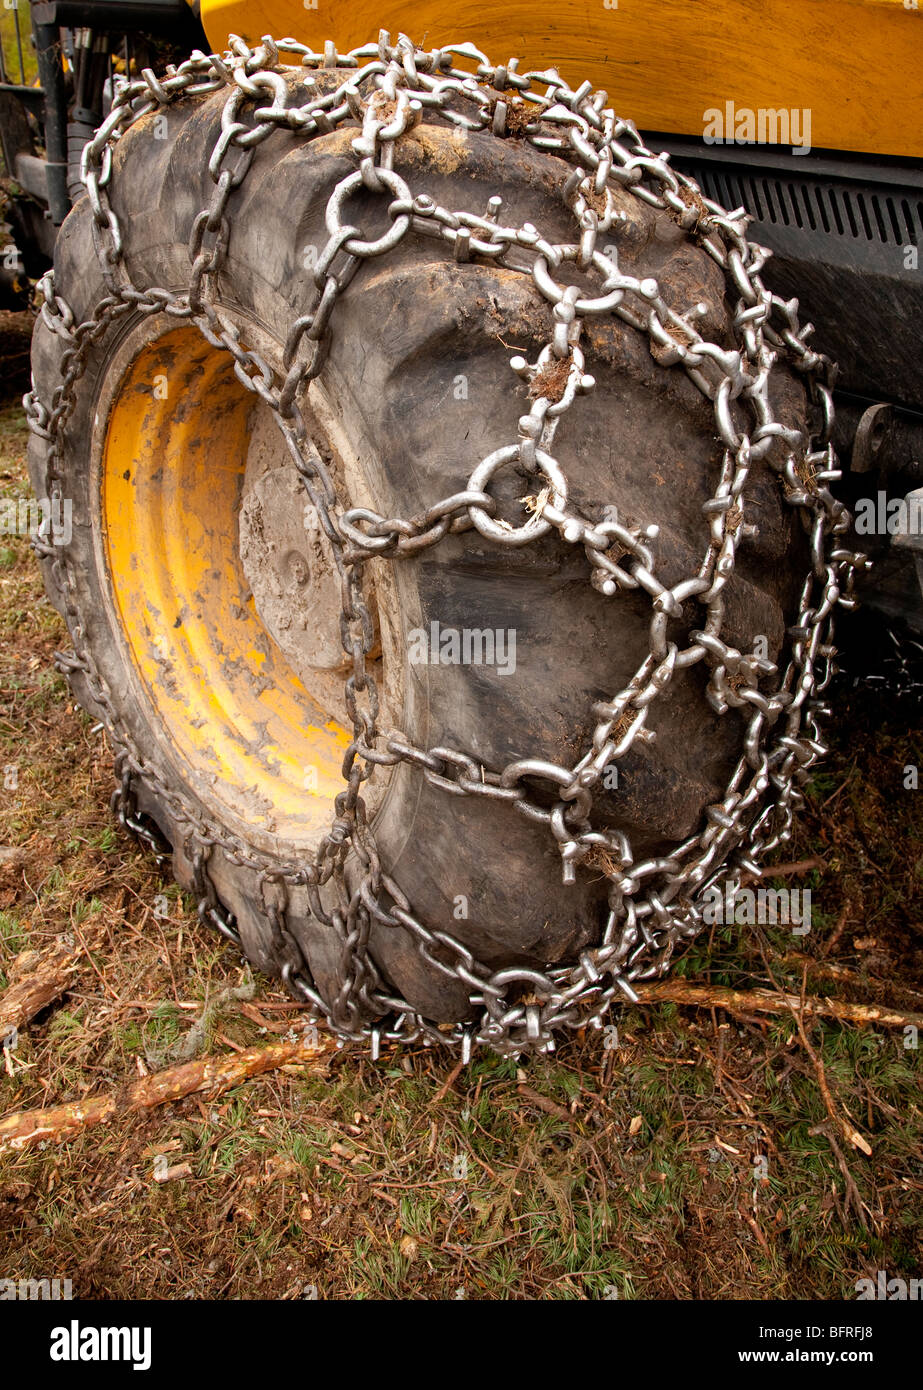 Spike le catene sul Trincia forestale pneumatico Foto stock - Alamy